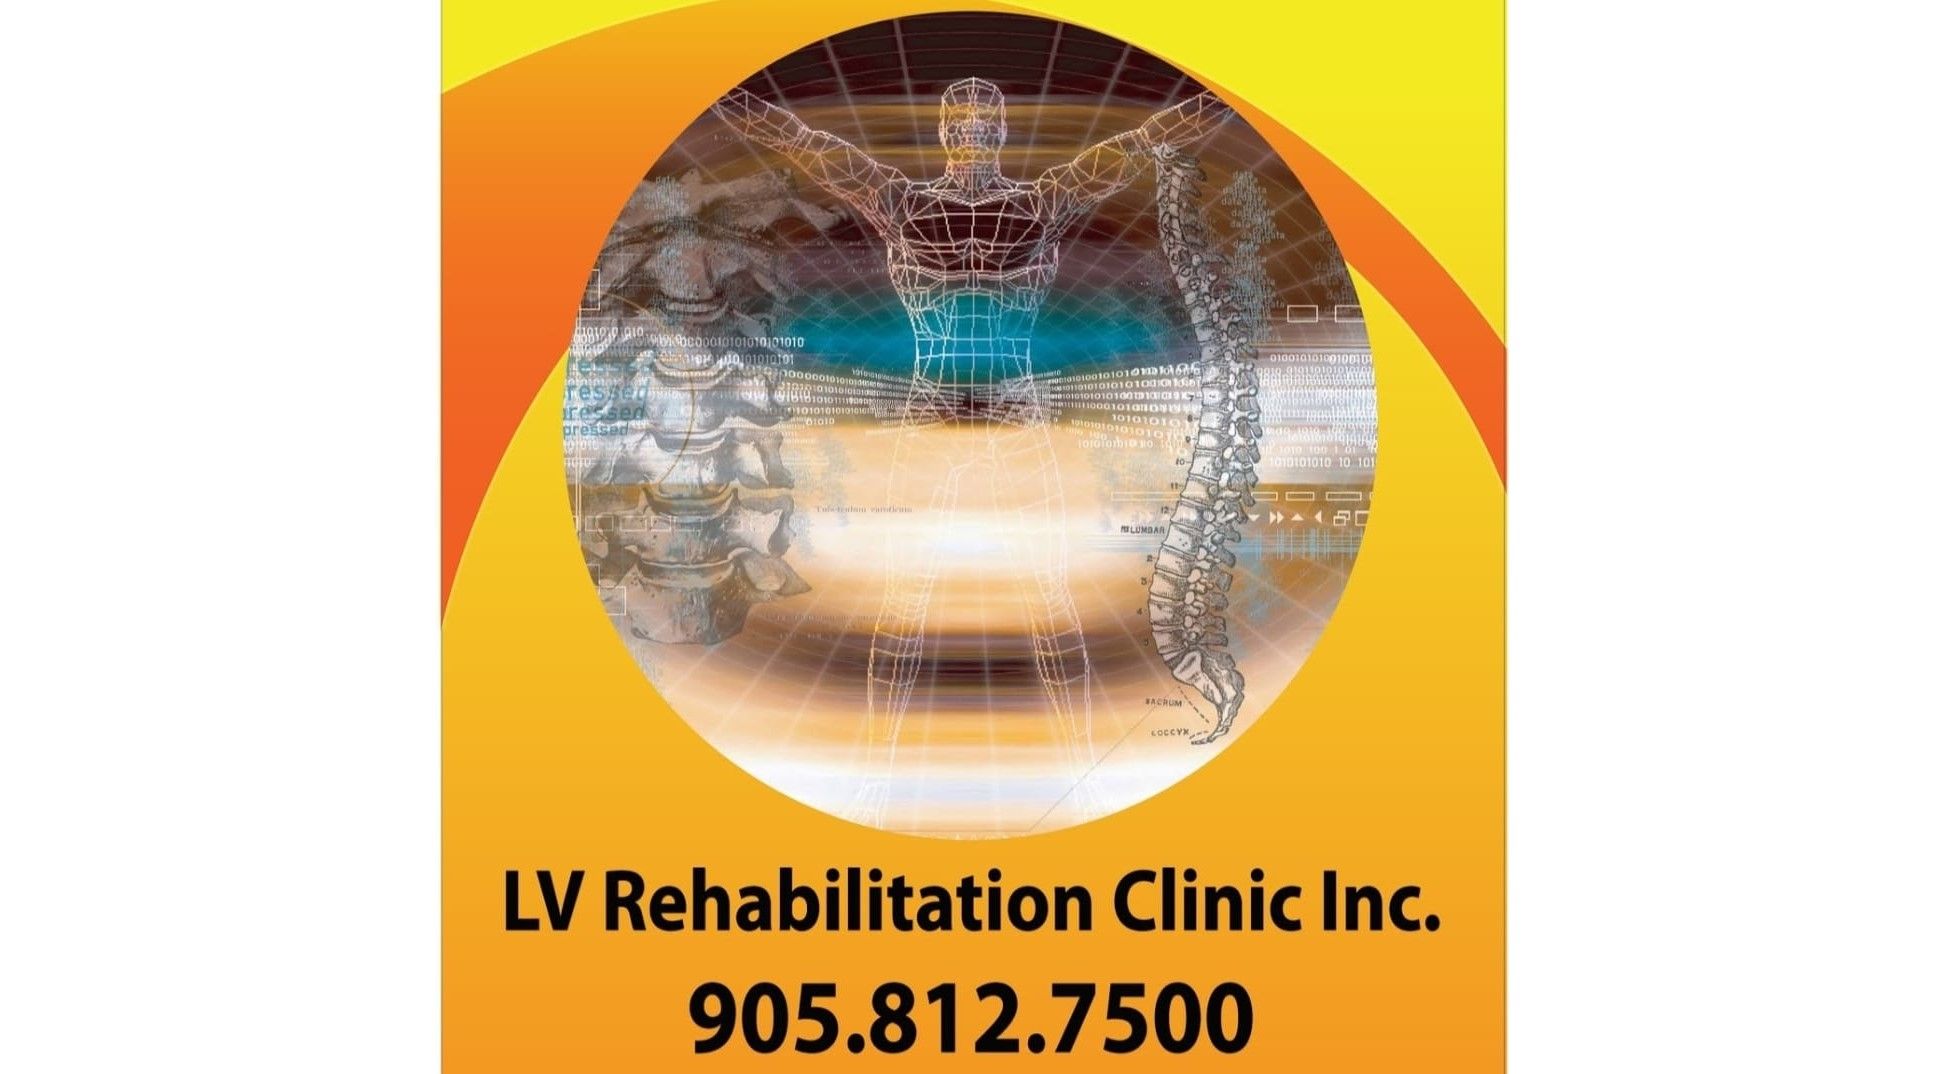 Rejuvenate Your Health - LV Rehabilitation Clinic